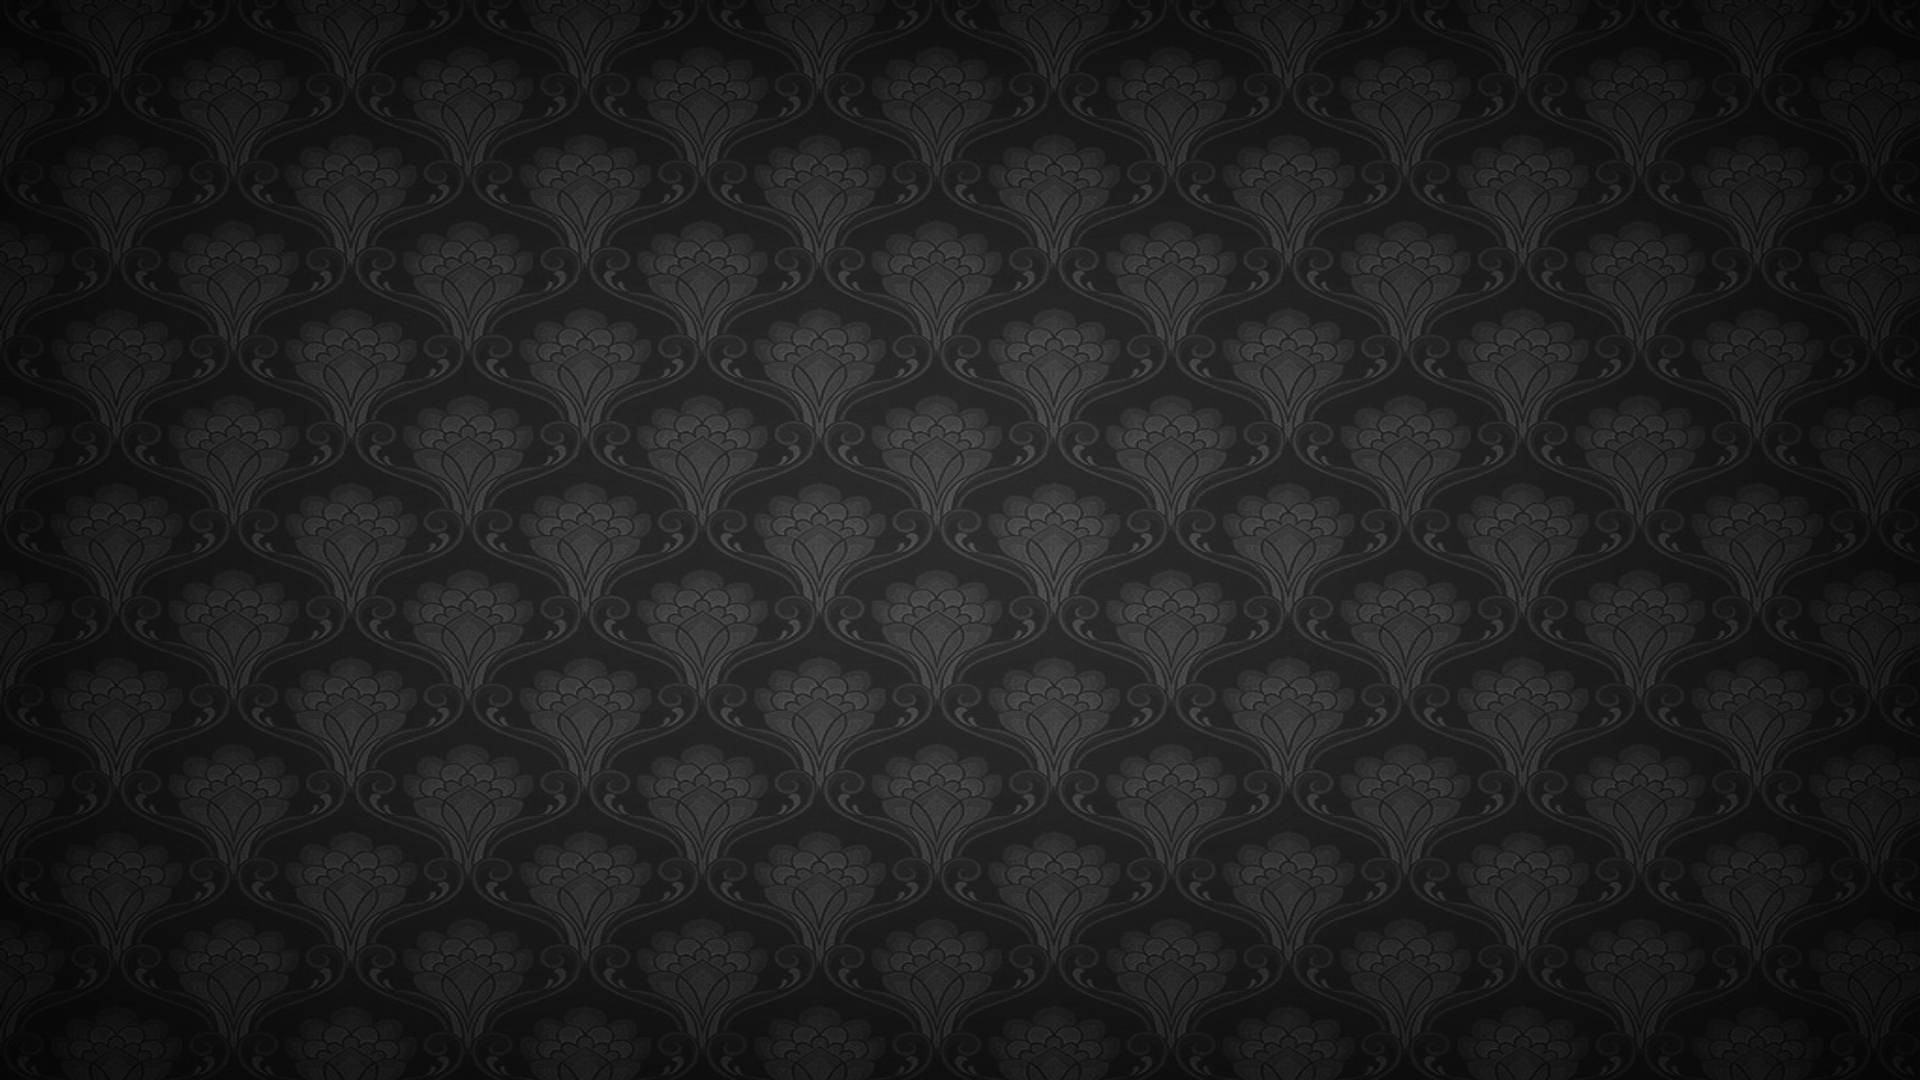 Cool black floral brown lauren ralph 1920x1080 wallpaper21265